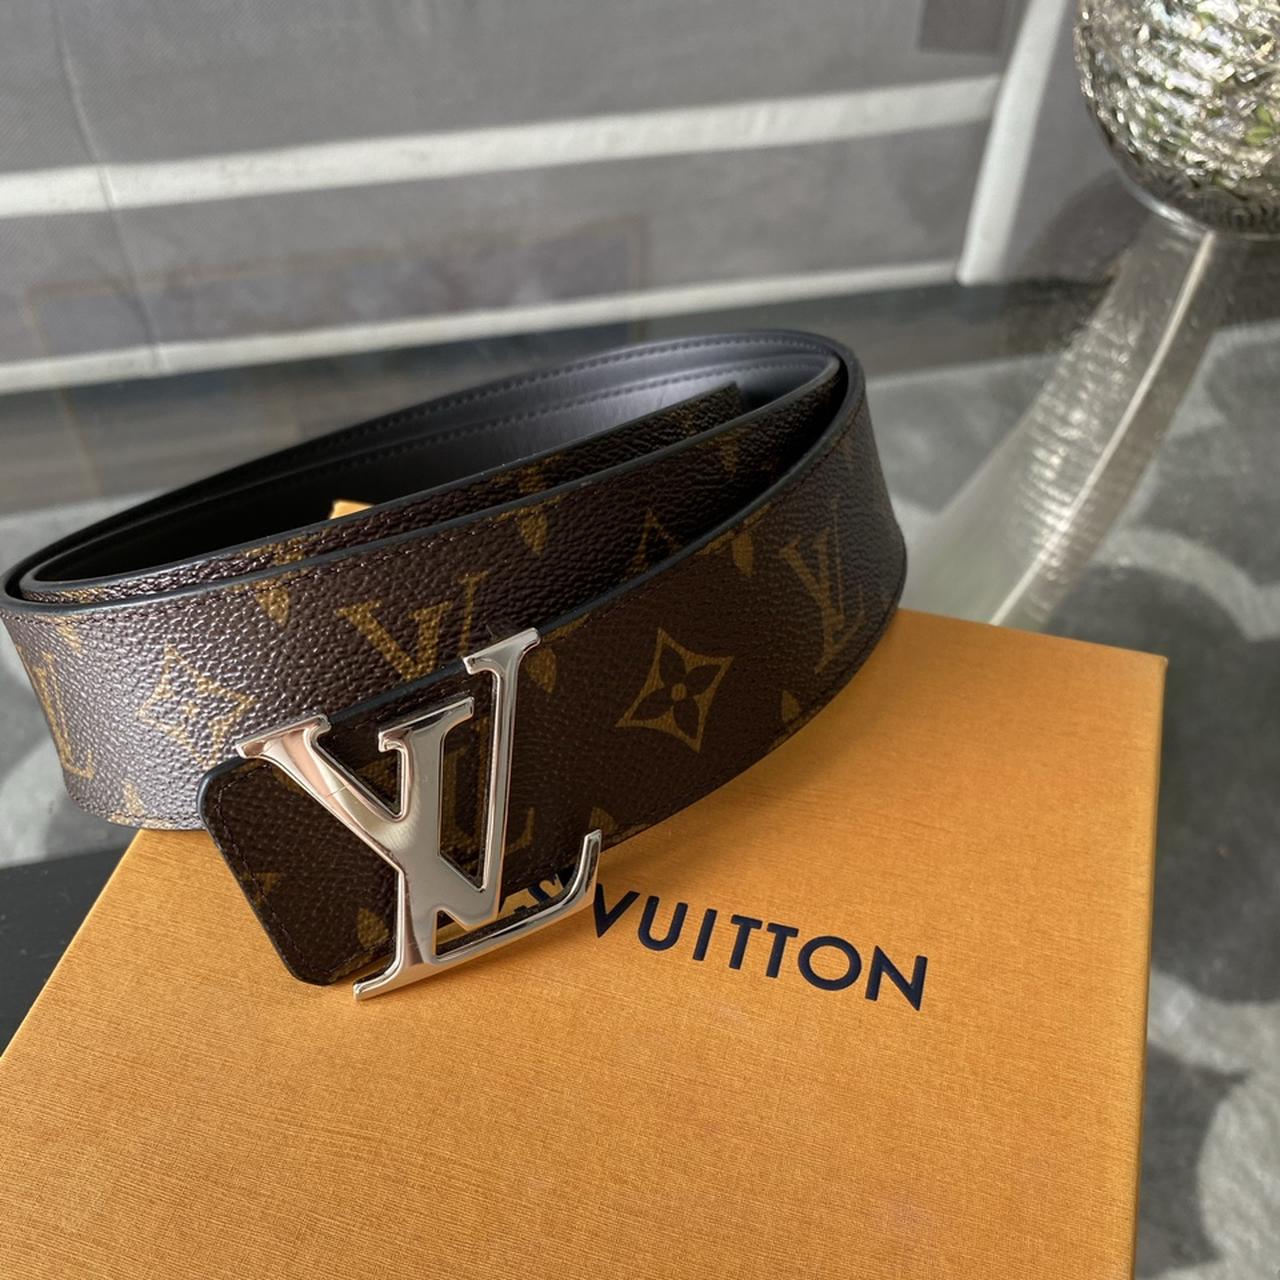 Original Louis Vuitton men belt with box and